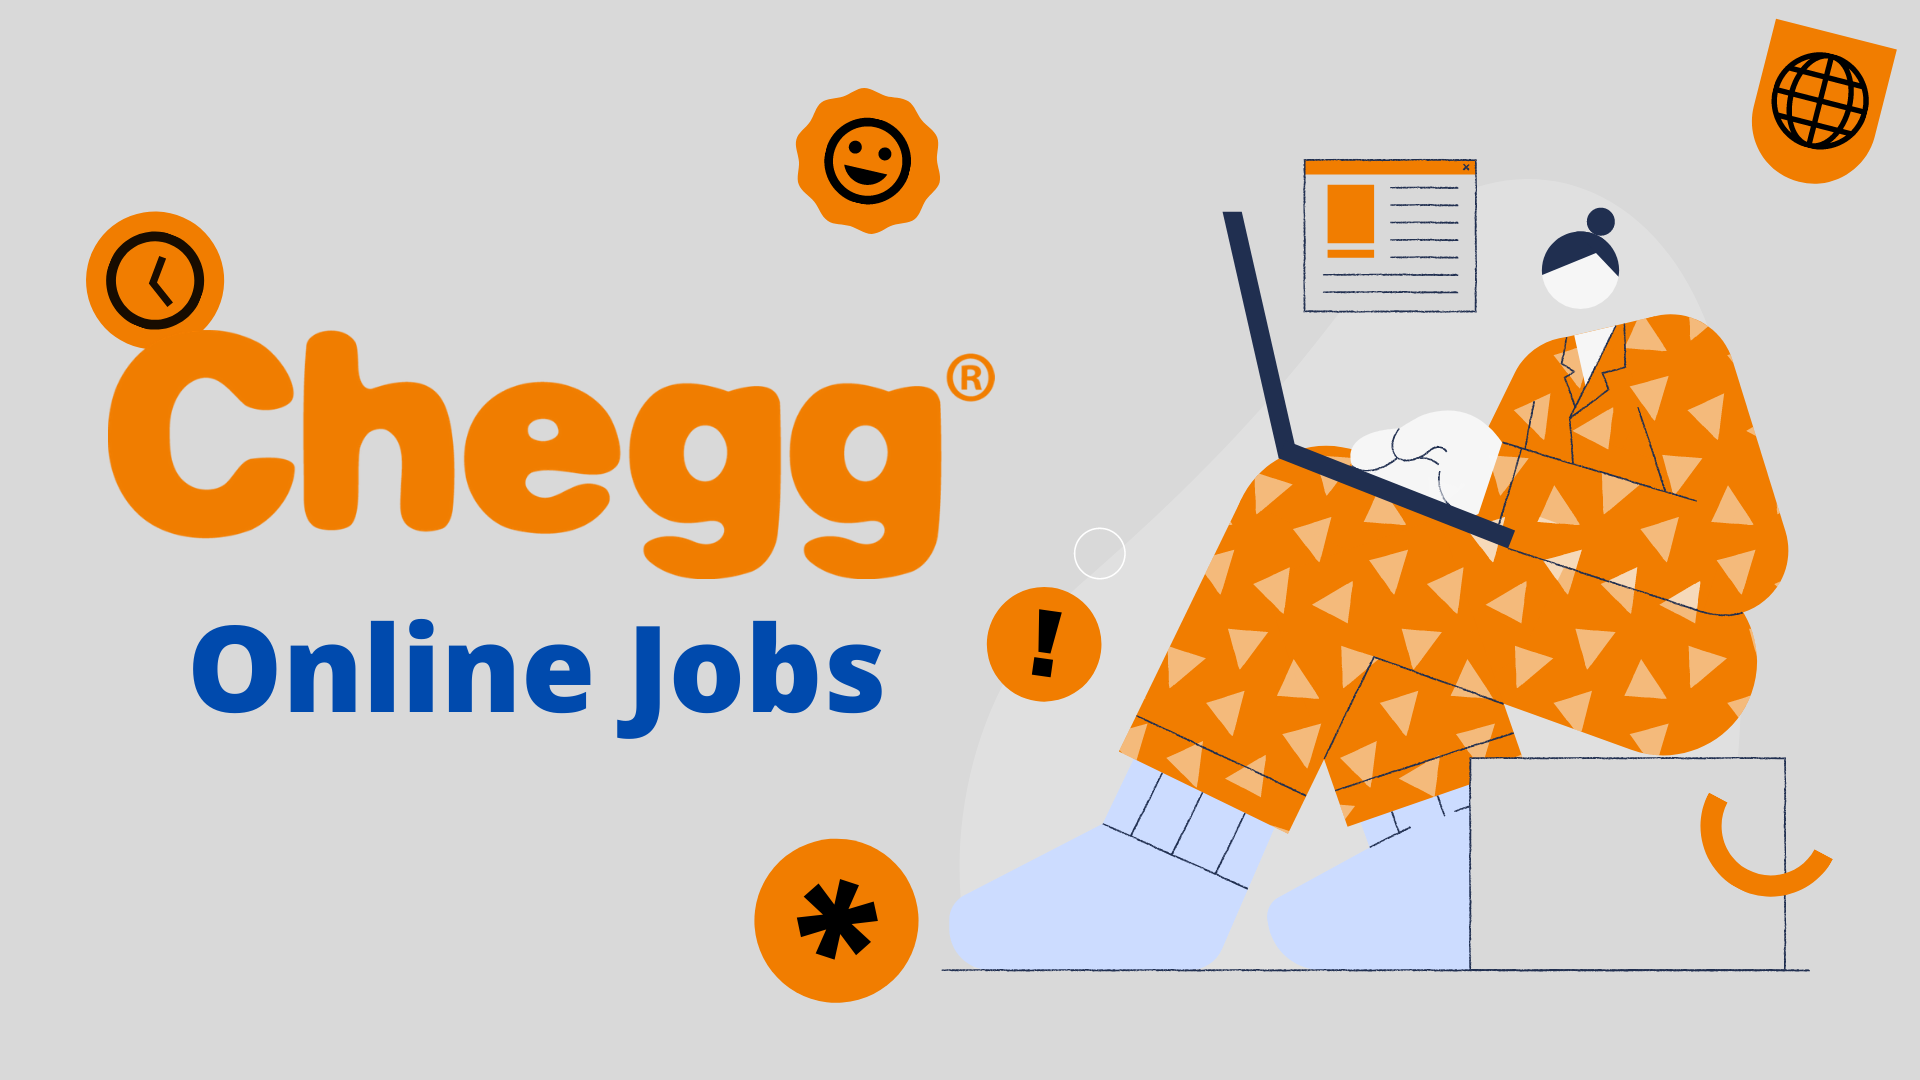 Techtunity Jobs Chegg career and jobs for urgent hiring 2021